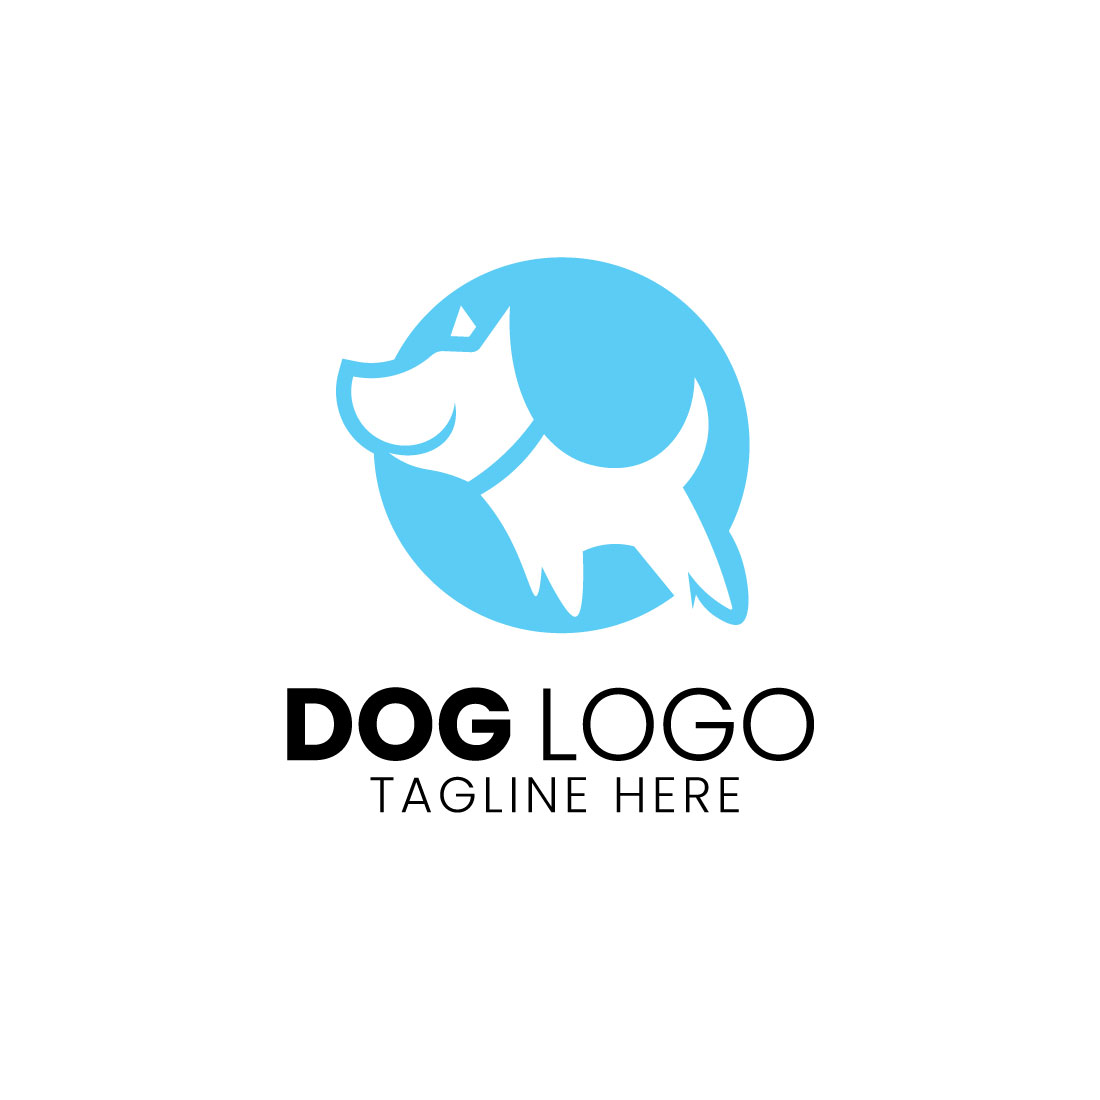 Dog Logo design preview image.